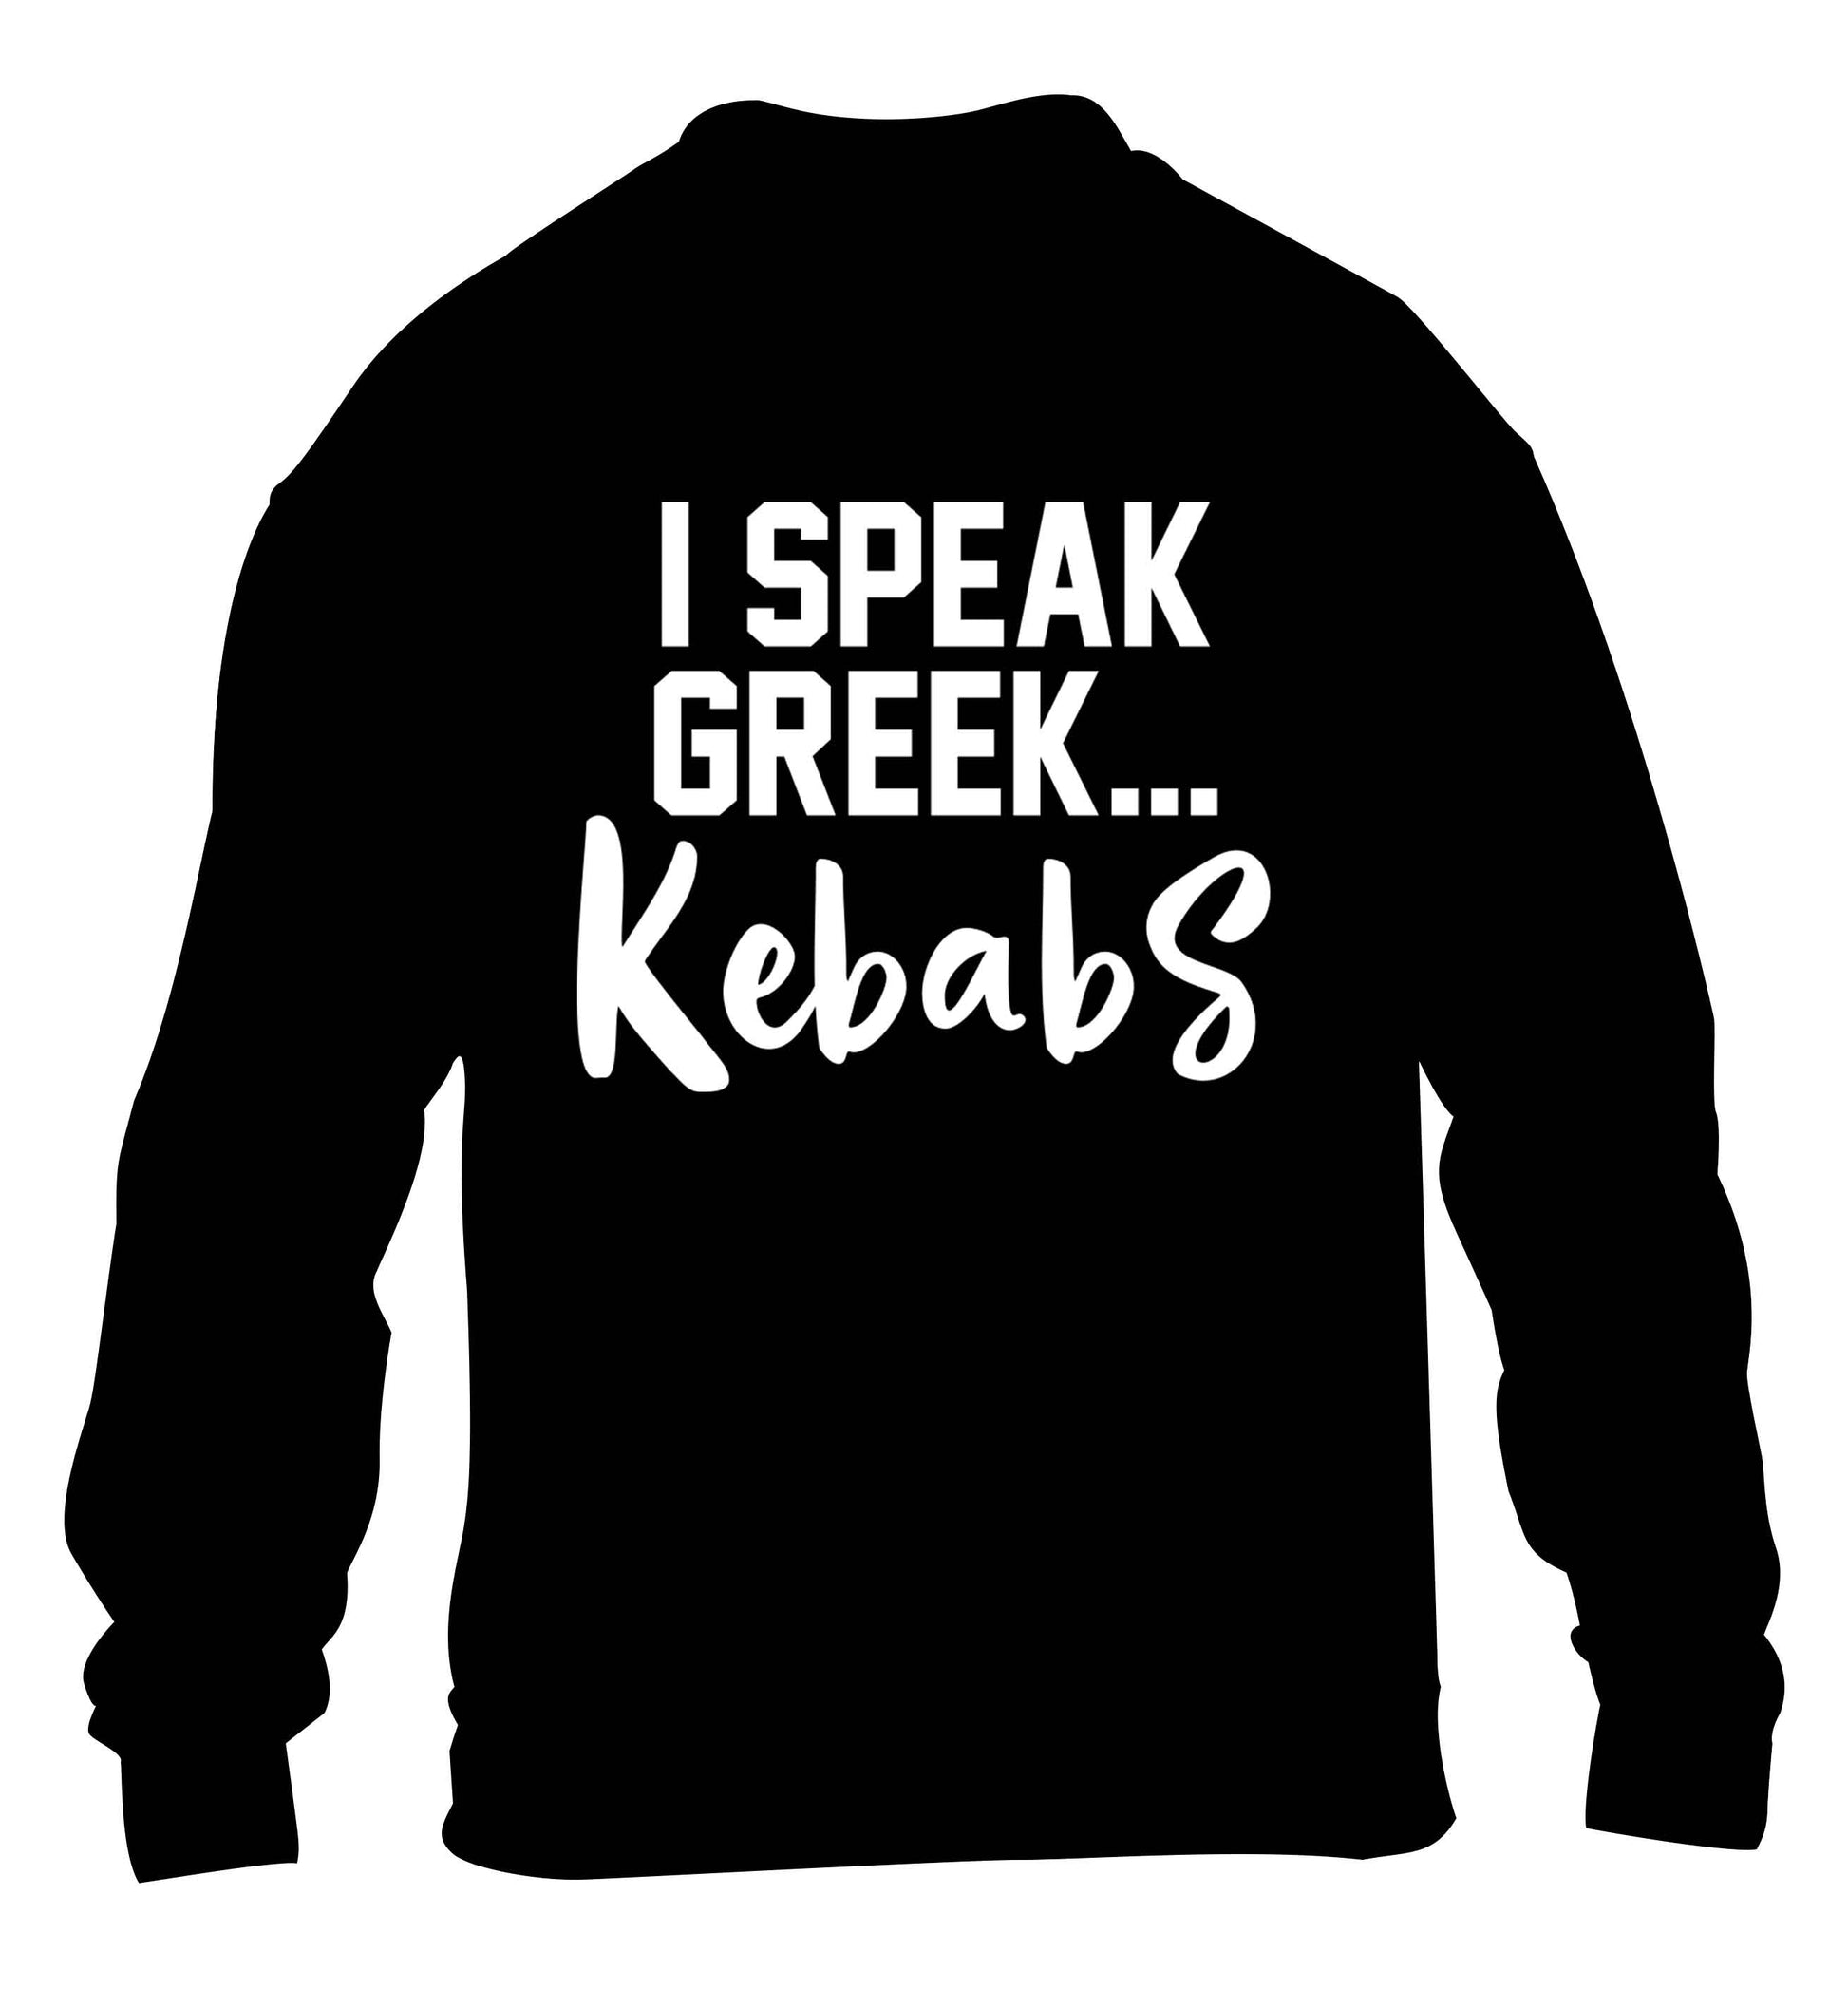 I speak Greek...kebabs children's black sweater 12-13 Years